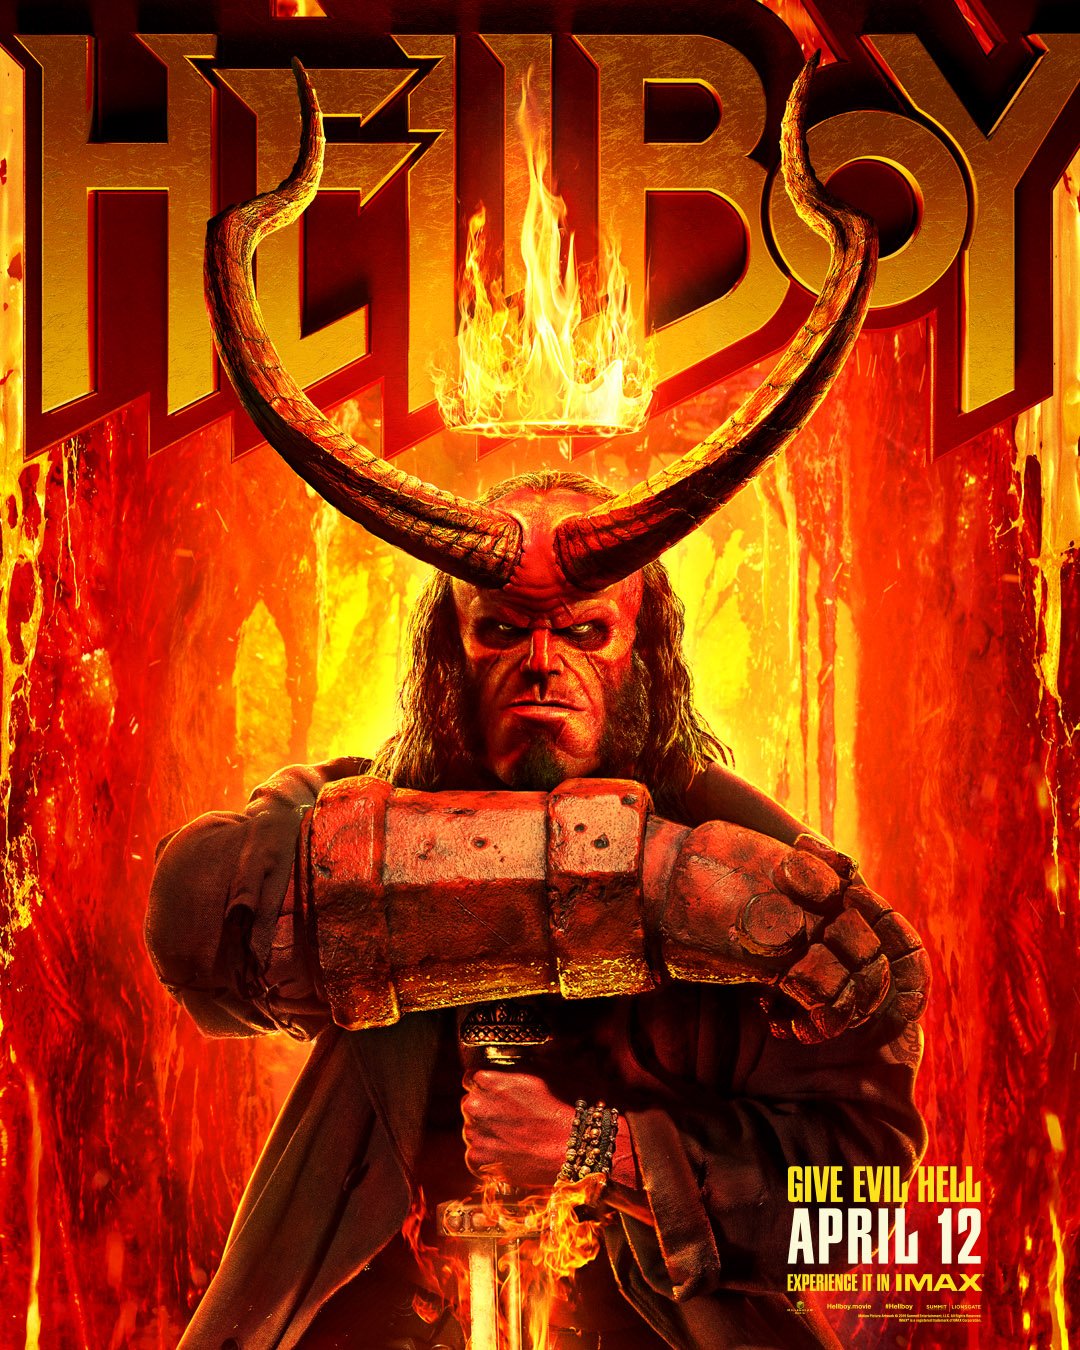 hellboy-poster